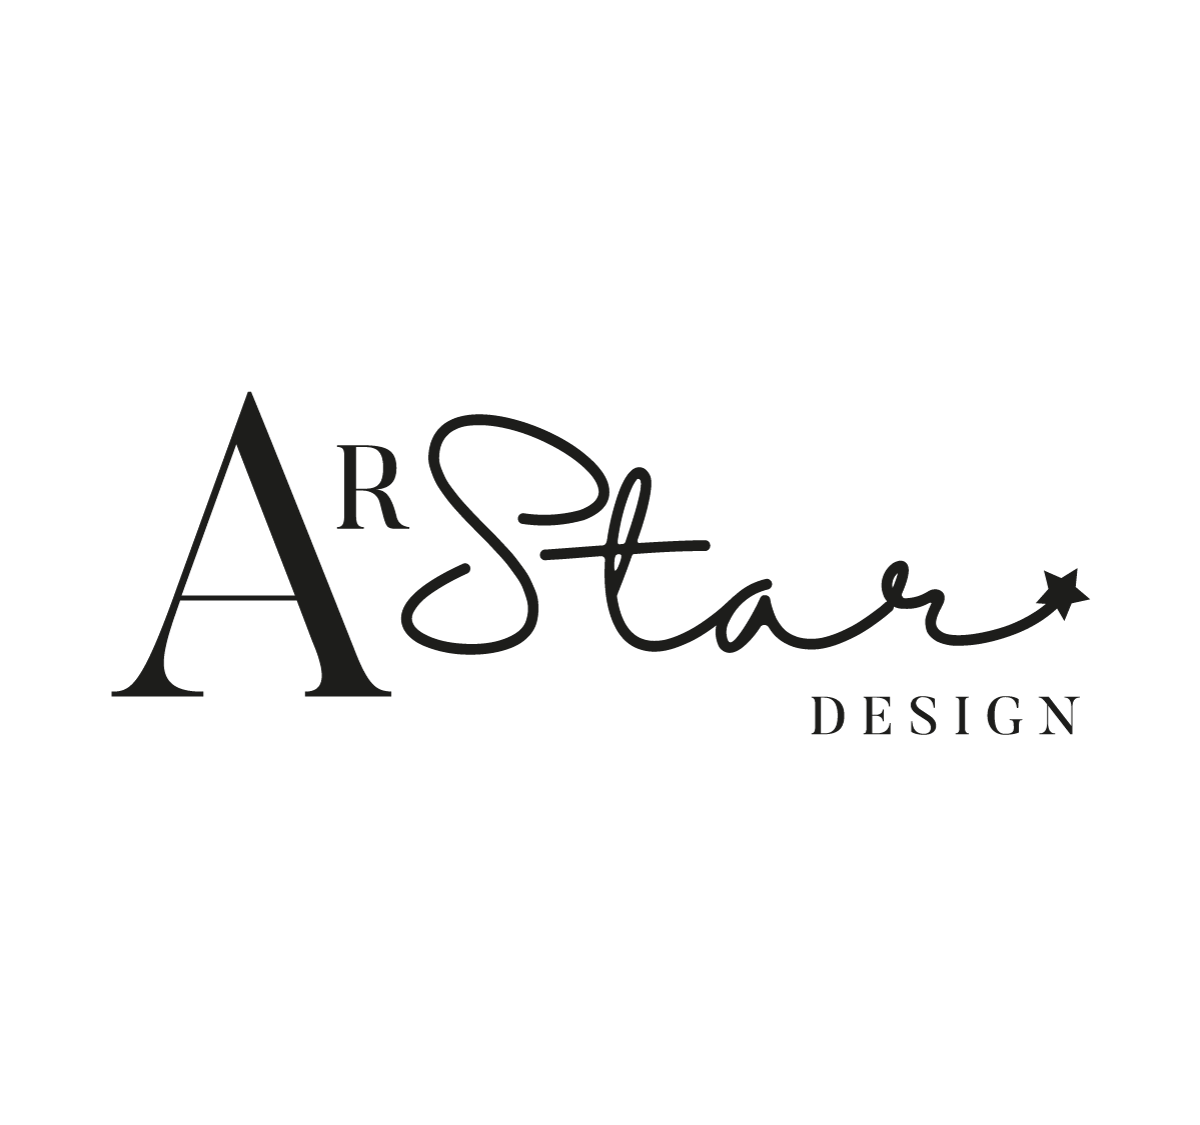 Services - Arstar.co.uk